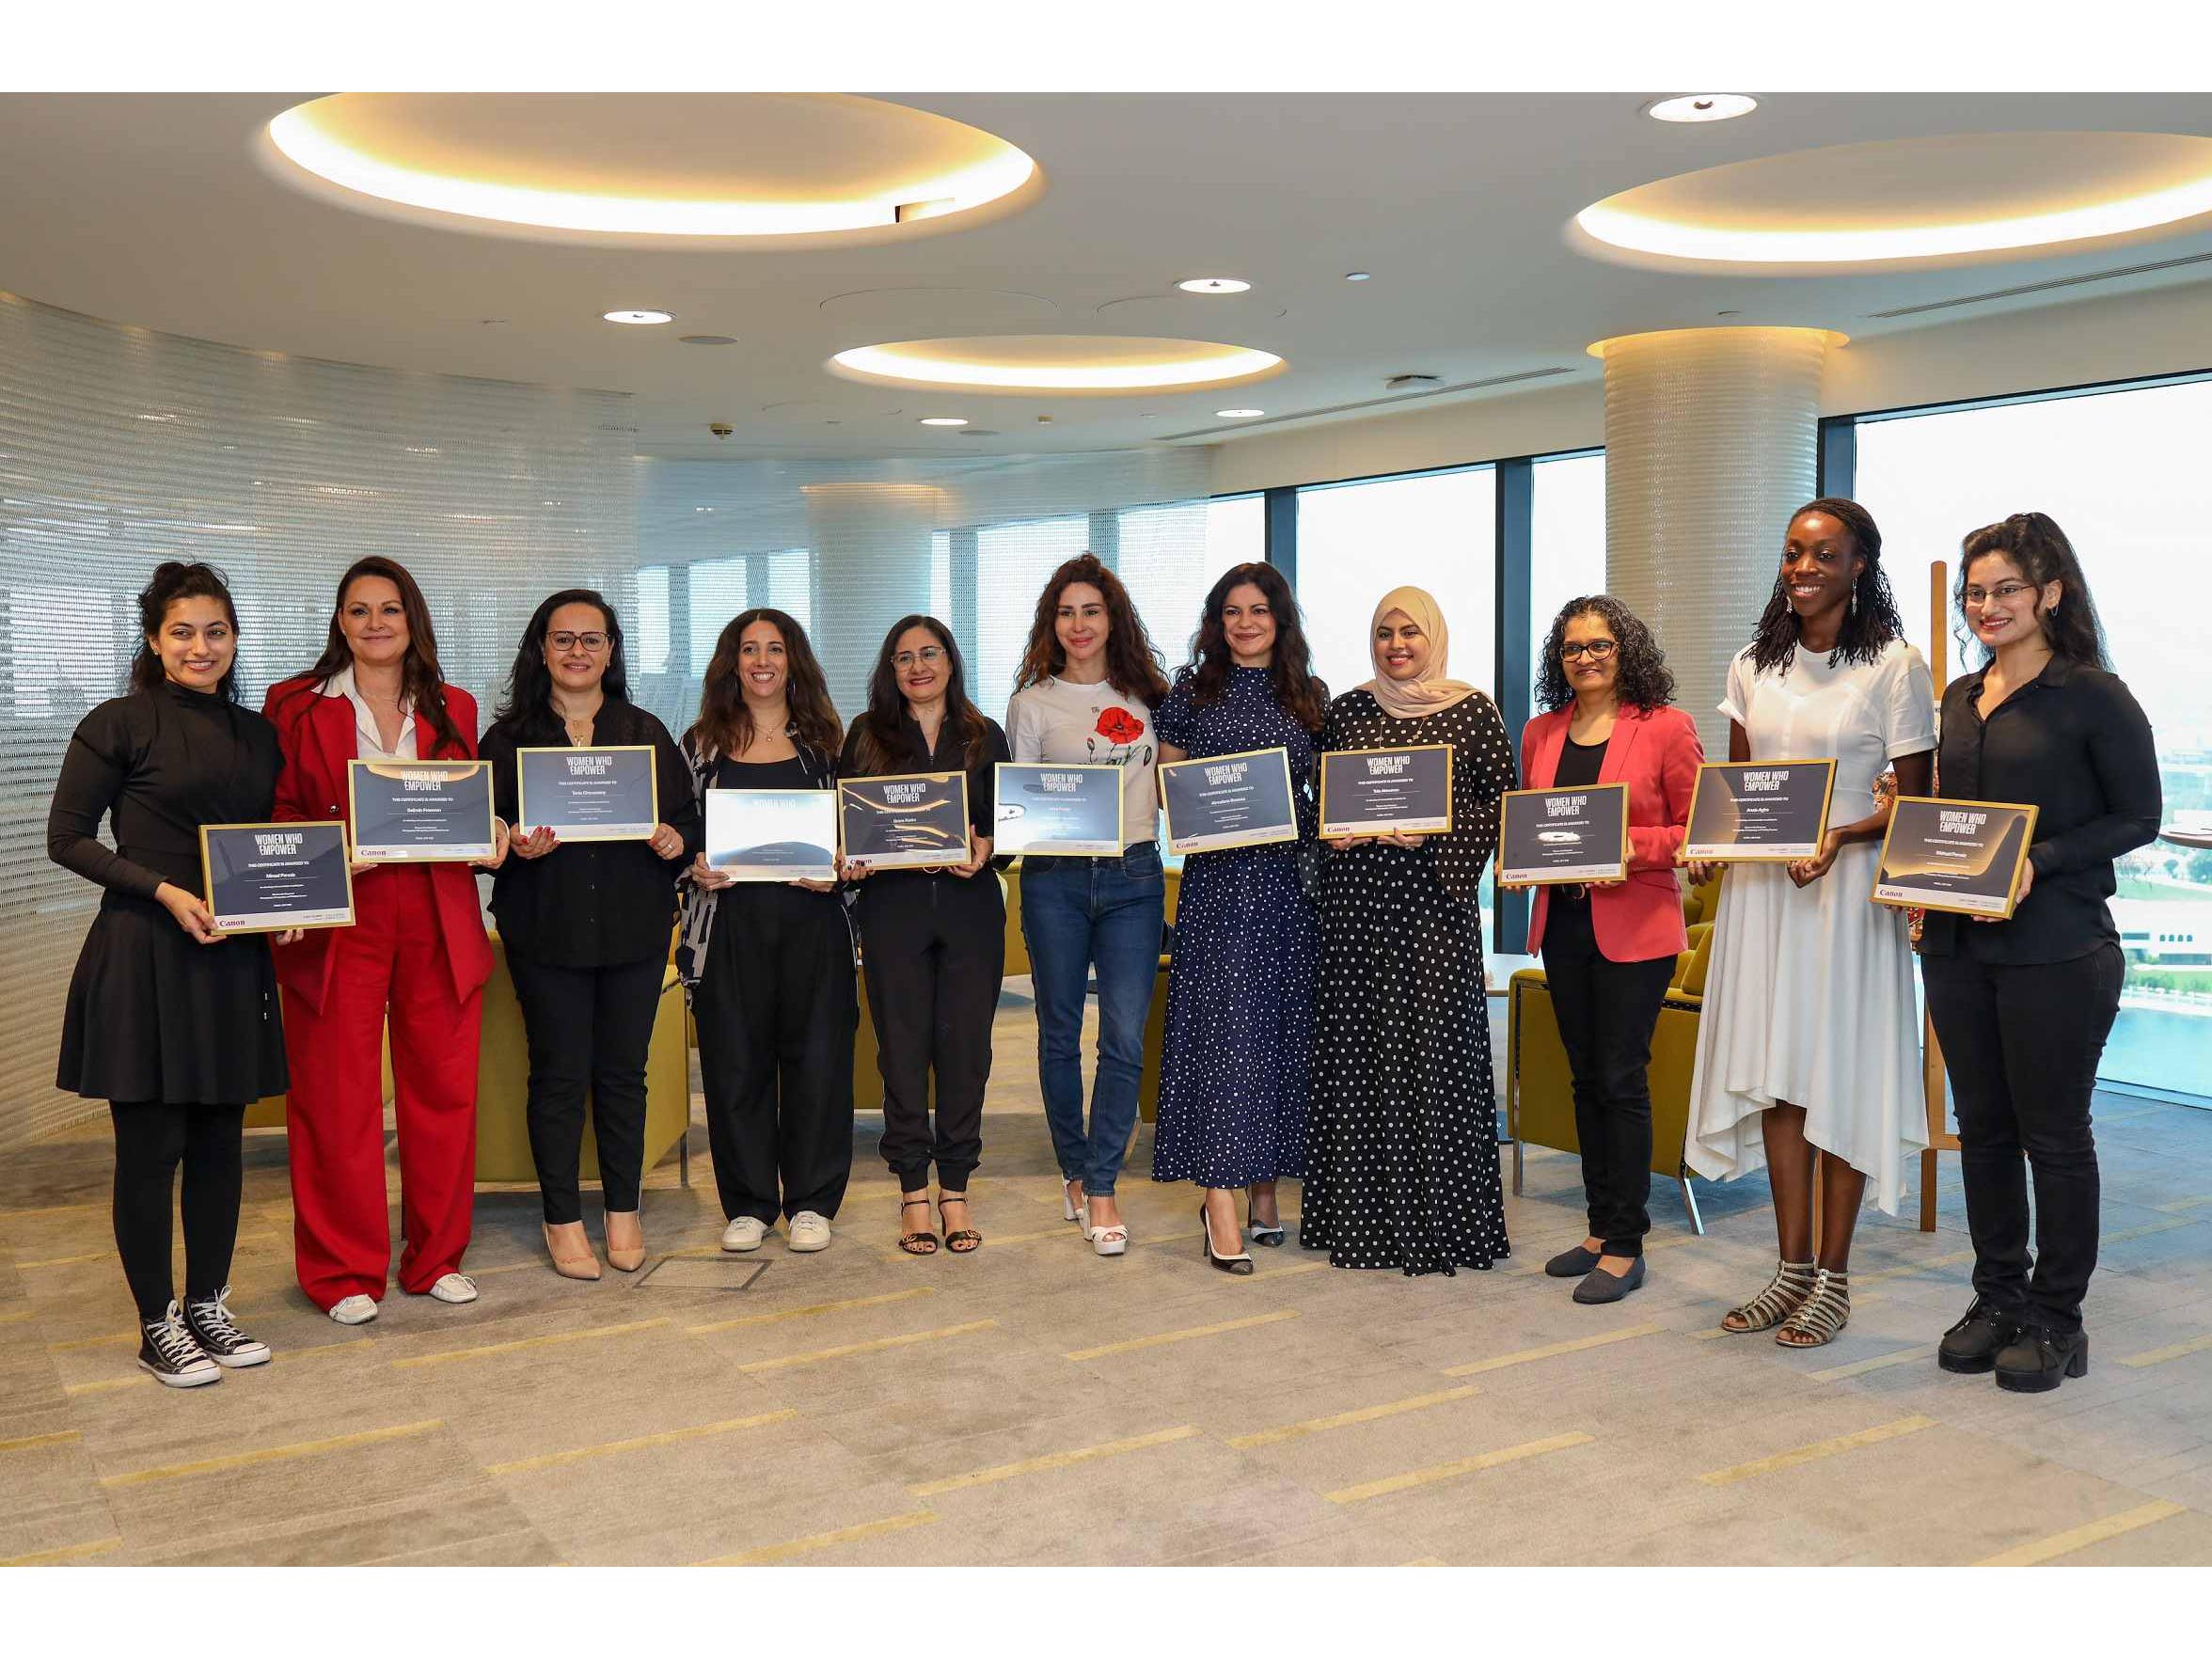 Canon and Dubai Business Women Council conclude 'Women Who Empower' initiative